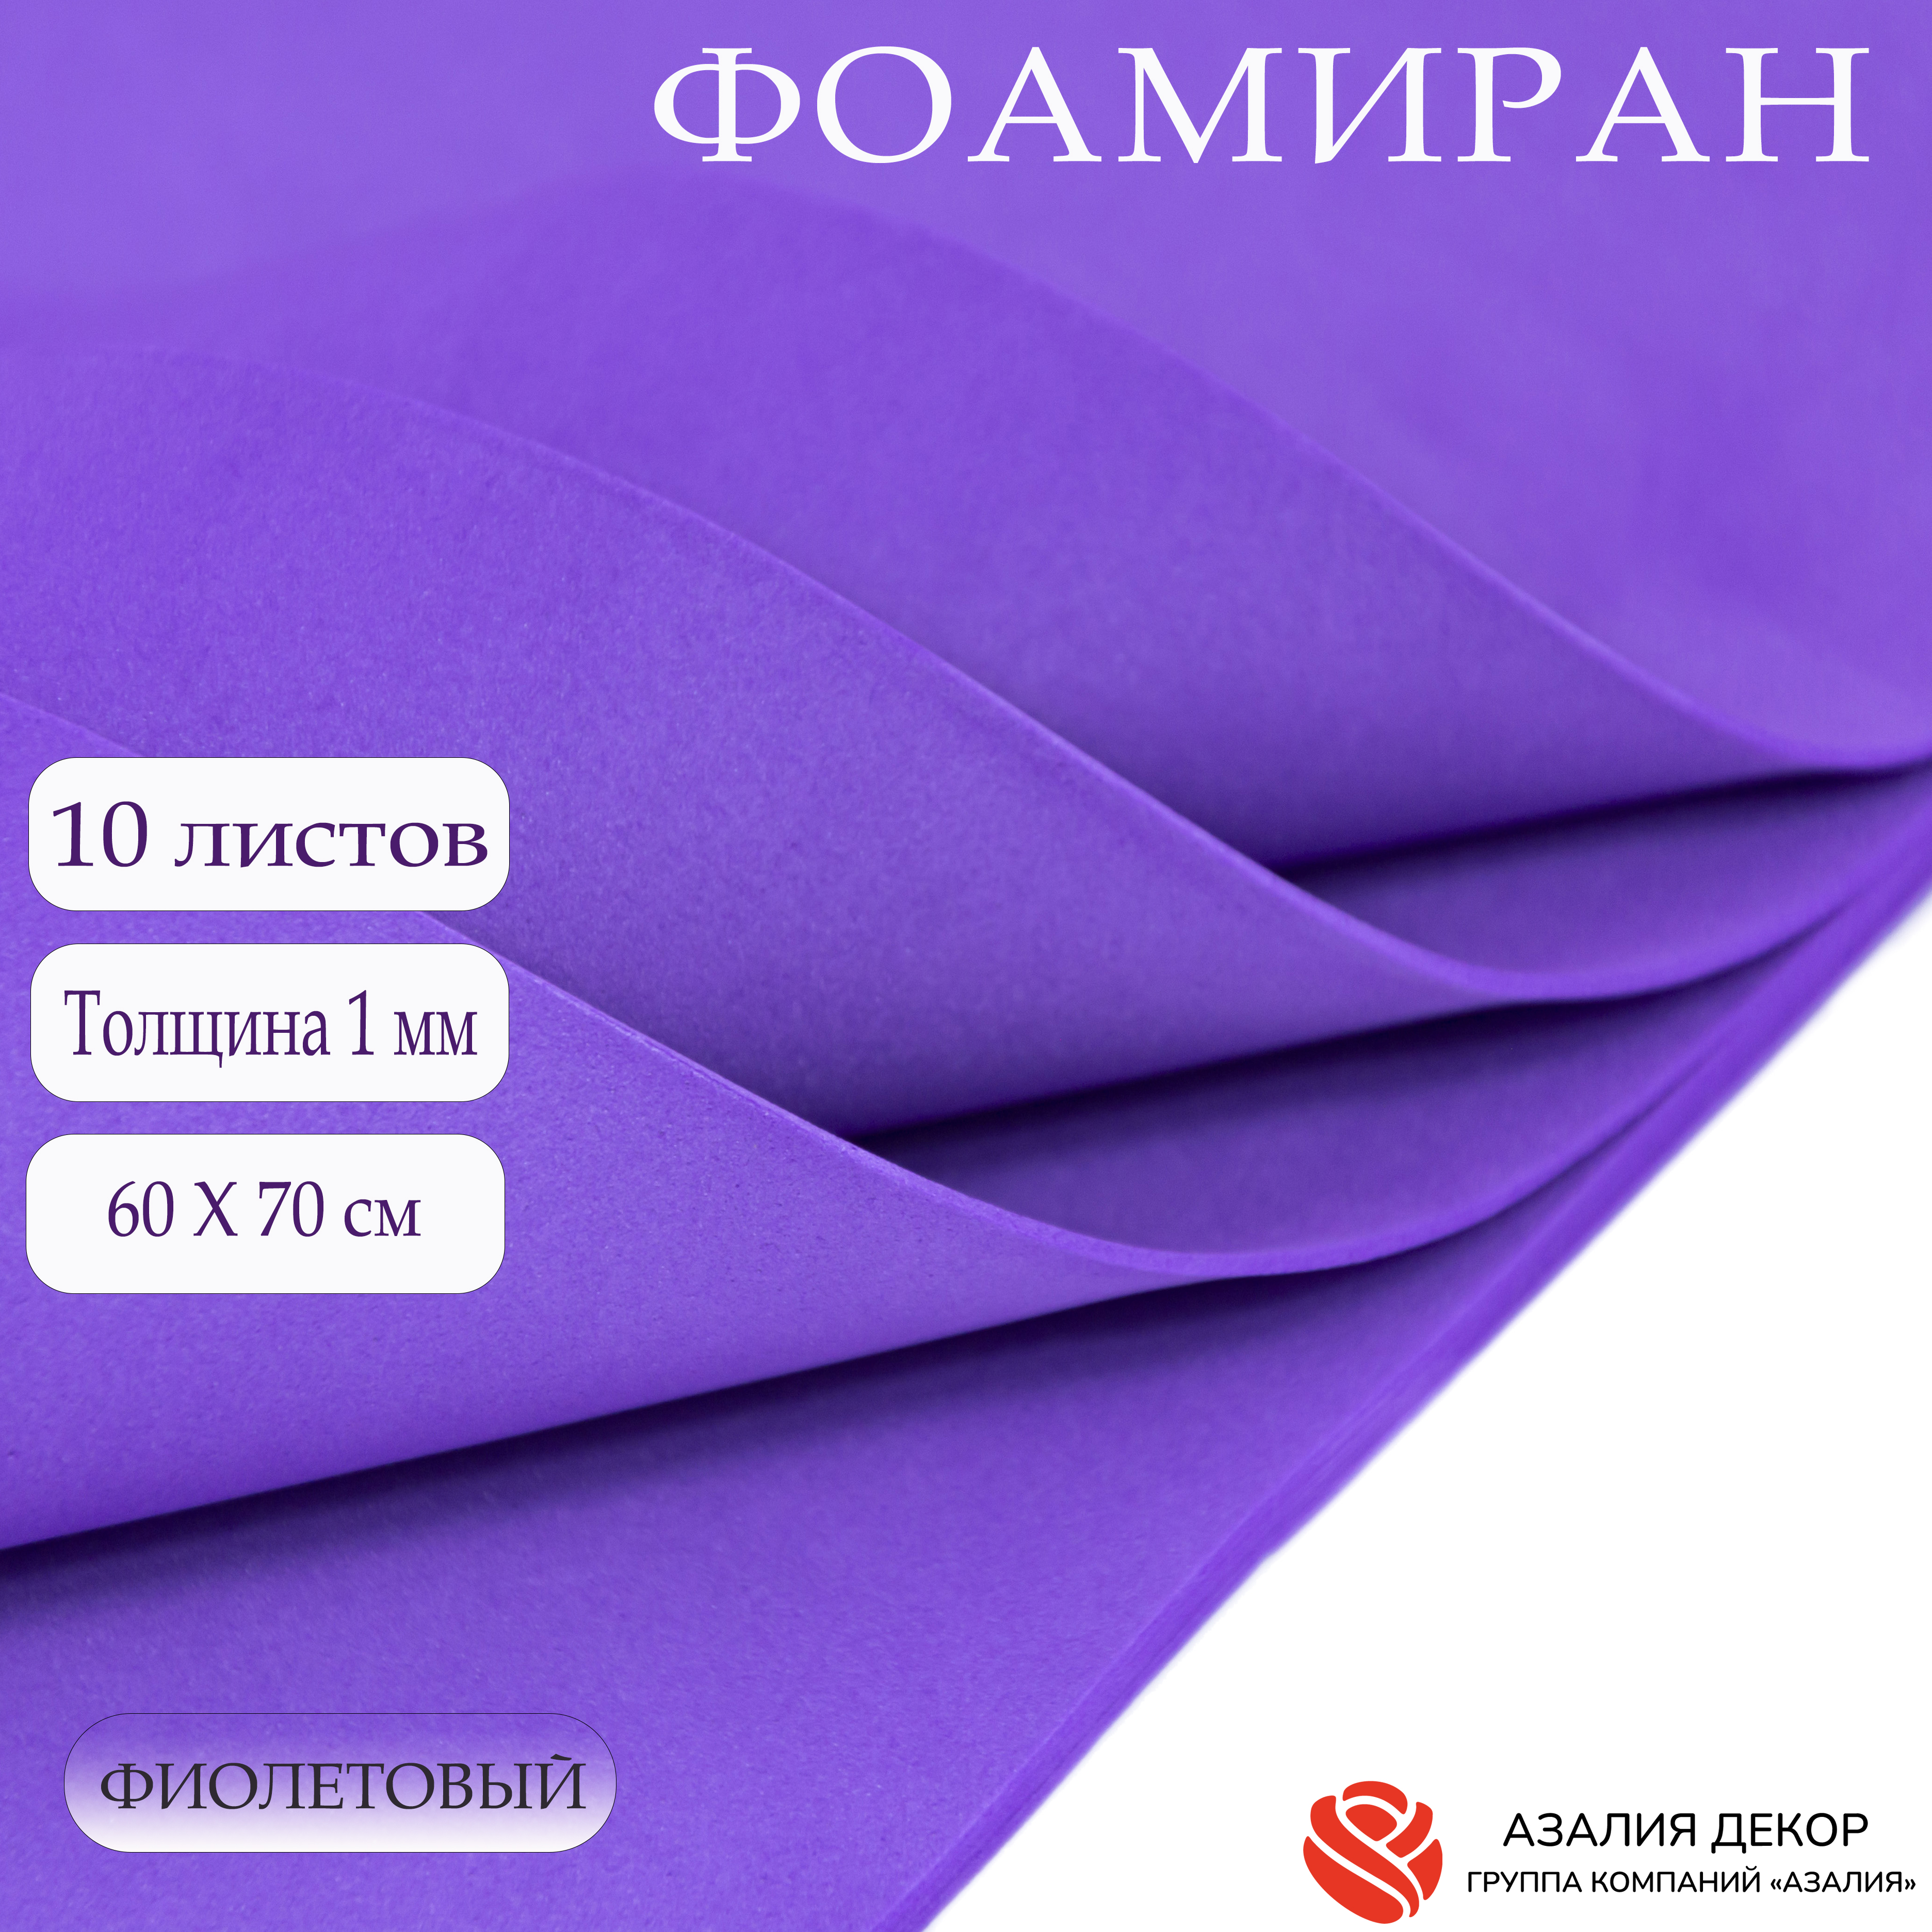 Фоамиран Азалия Декор 10 листов 1 мм 60х70см фиолетовый - фото 1